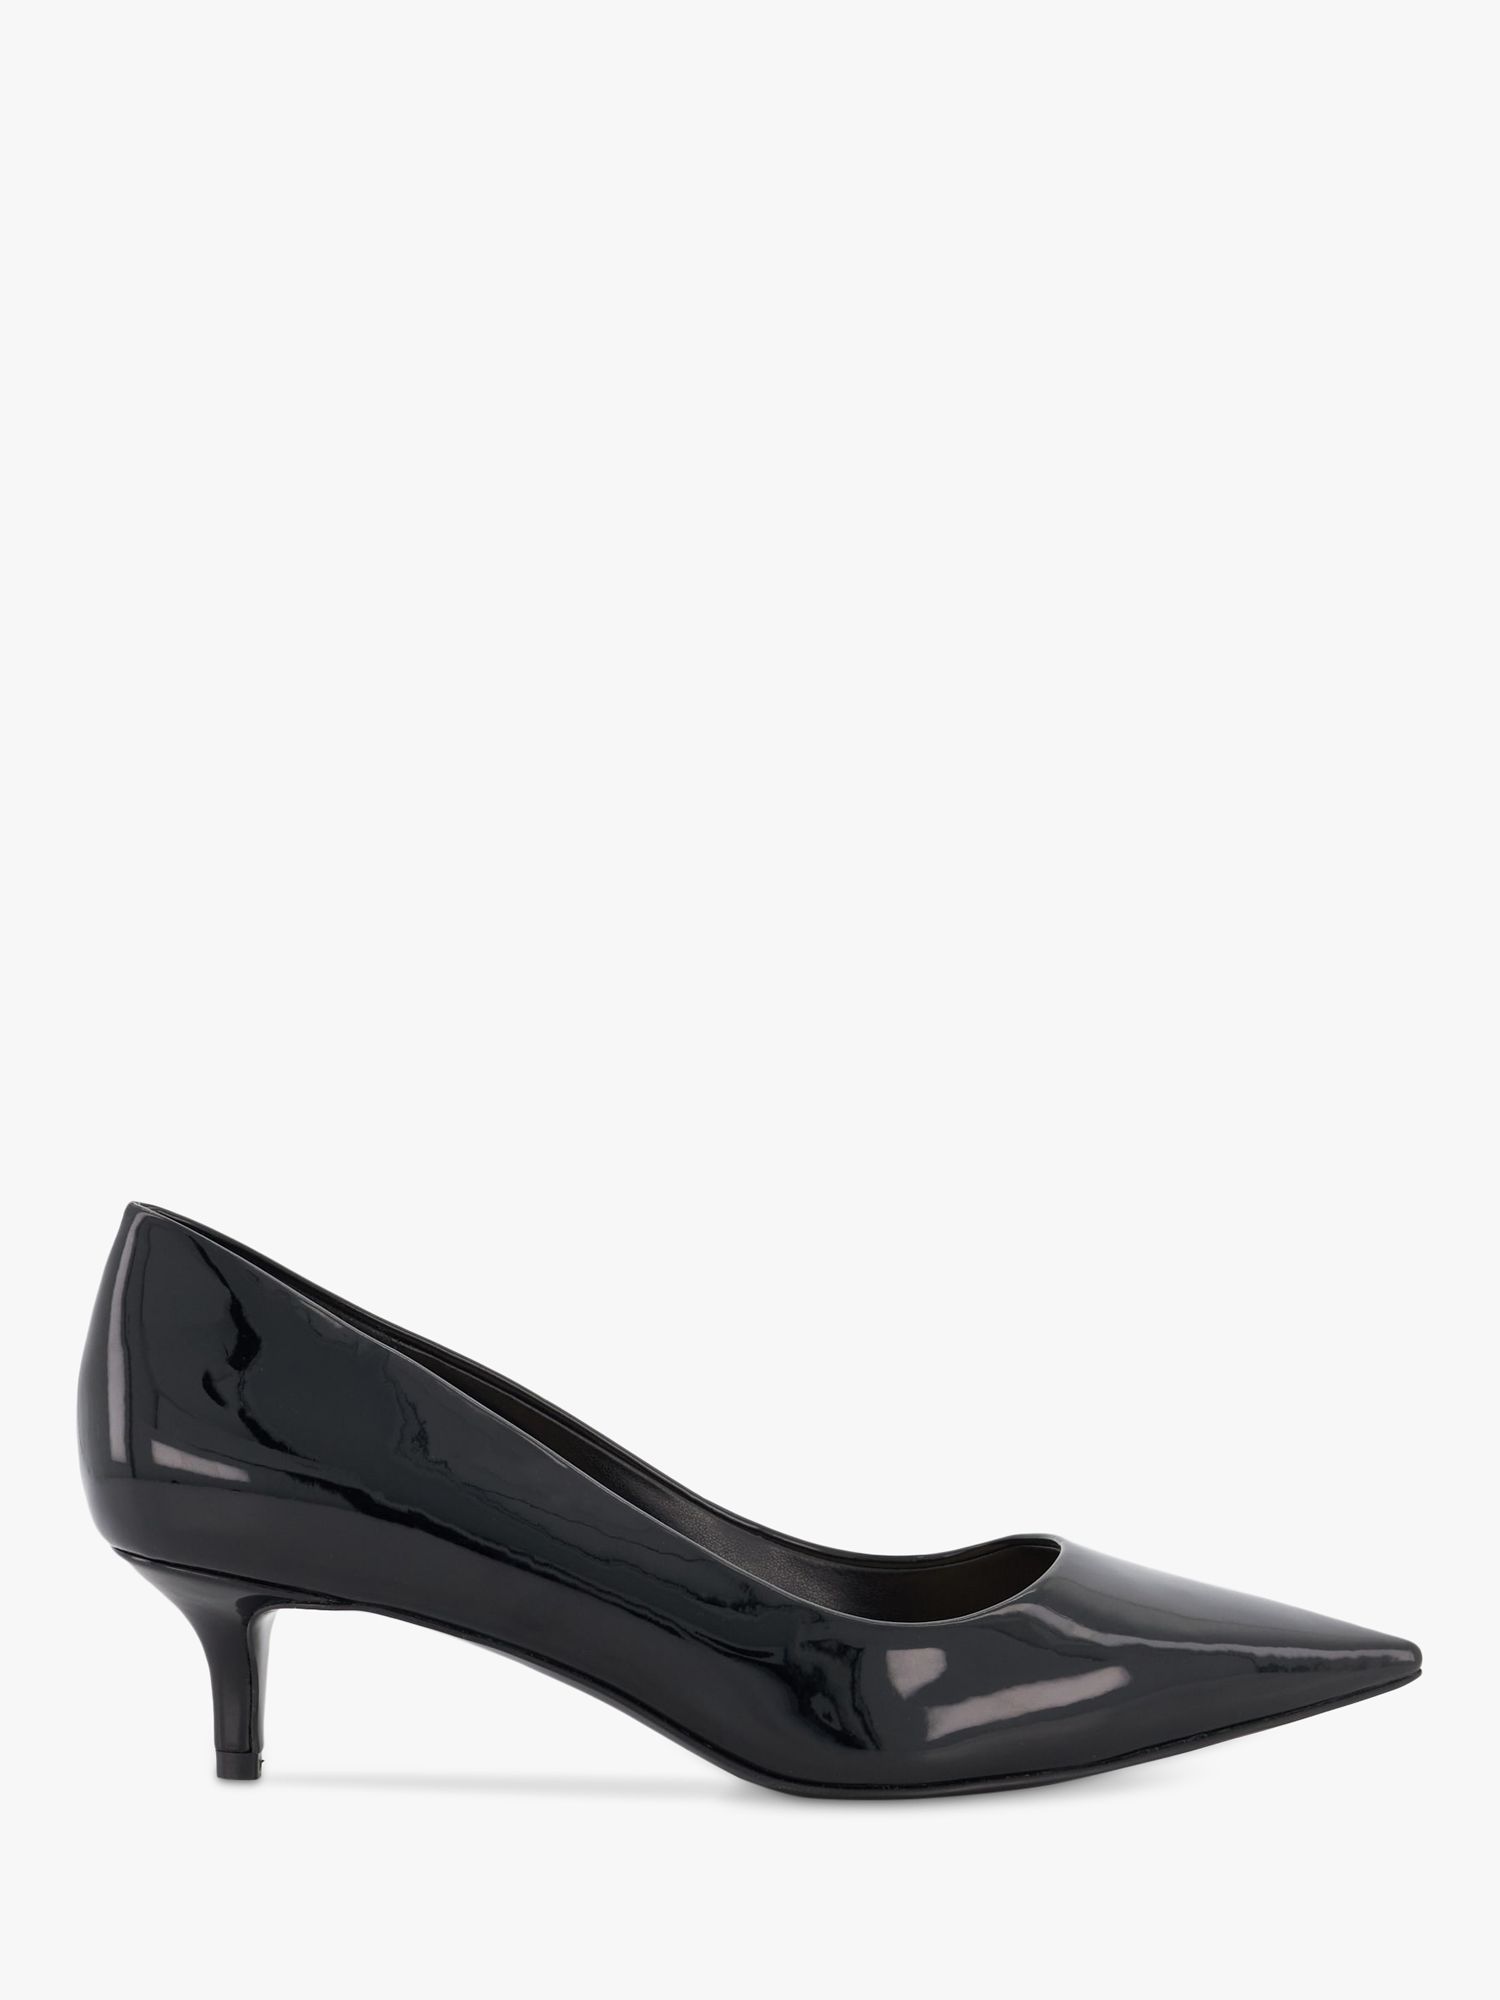 Dune Advanced Stiletto Heel Court Shoes, Black at John Lewis & Partners